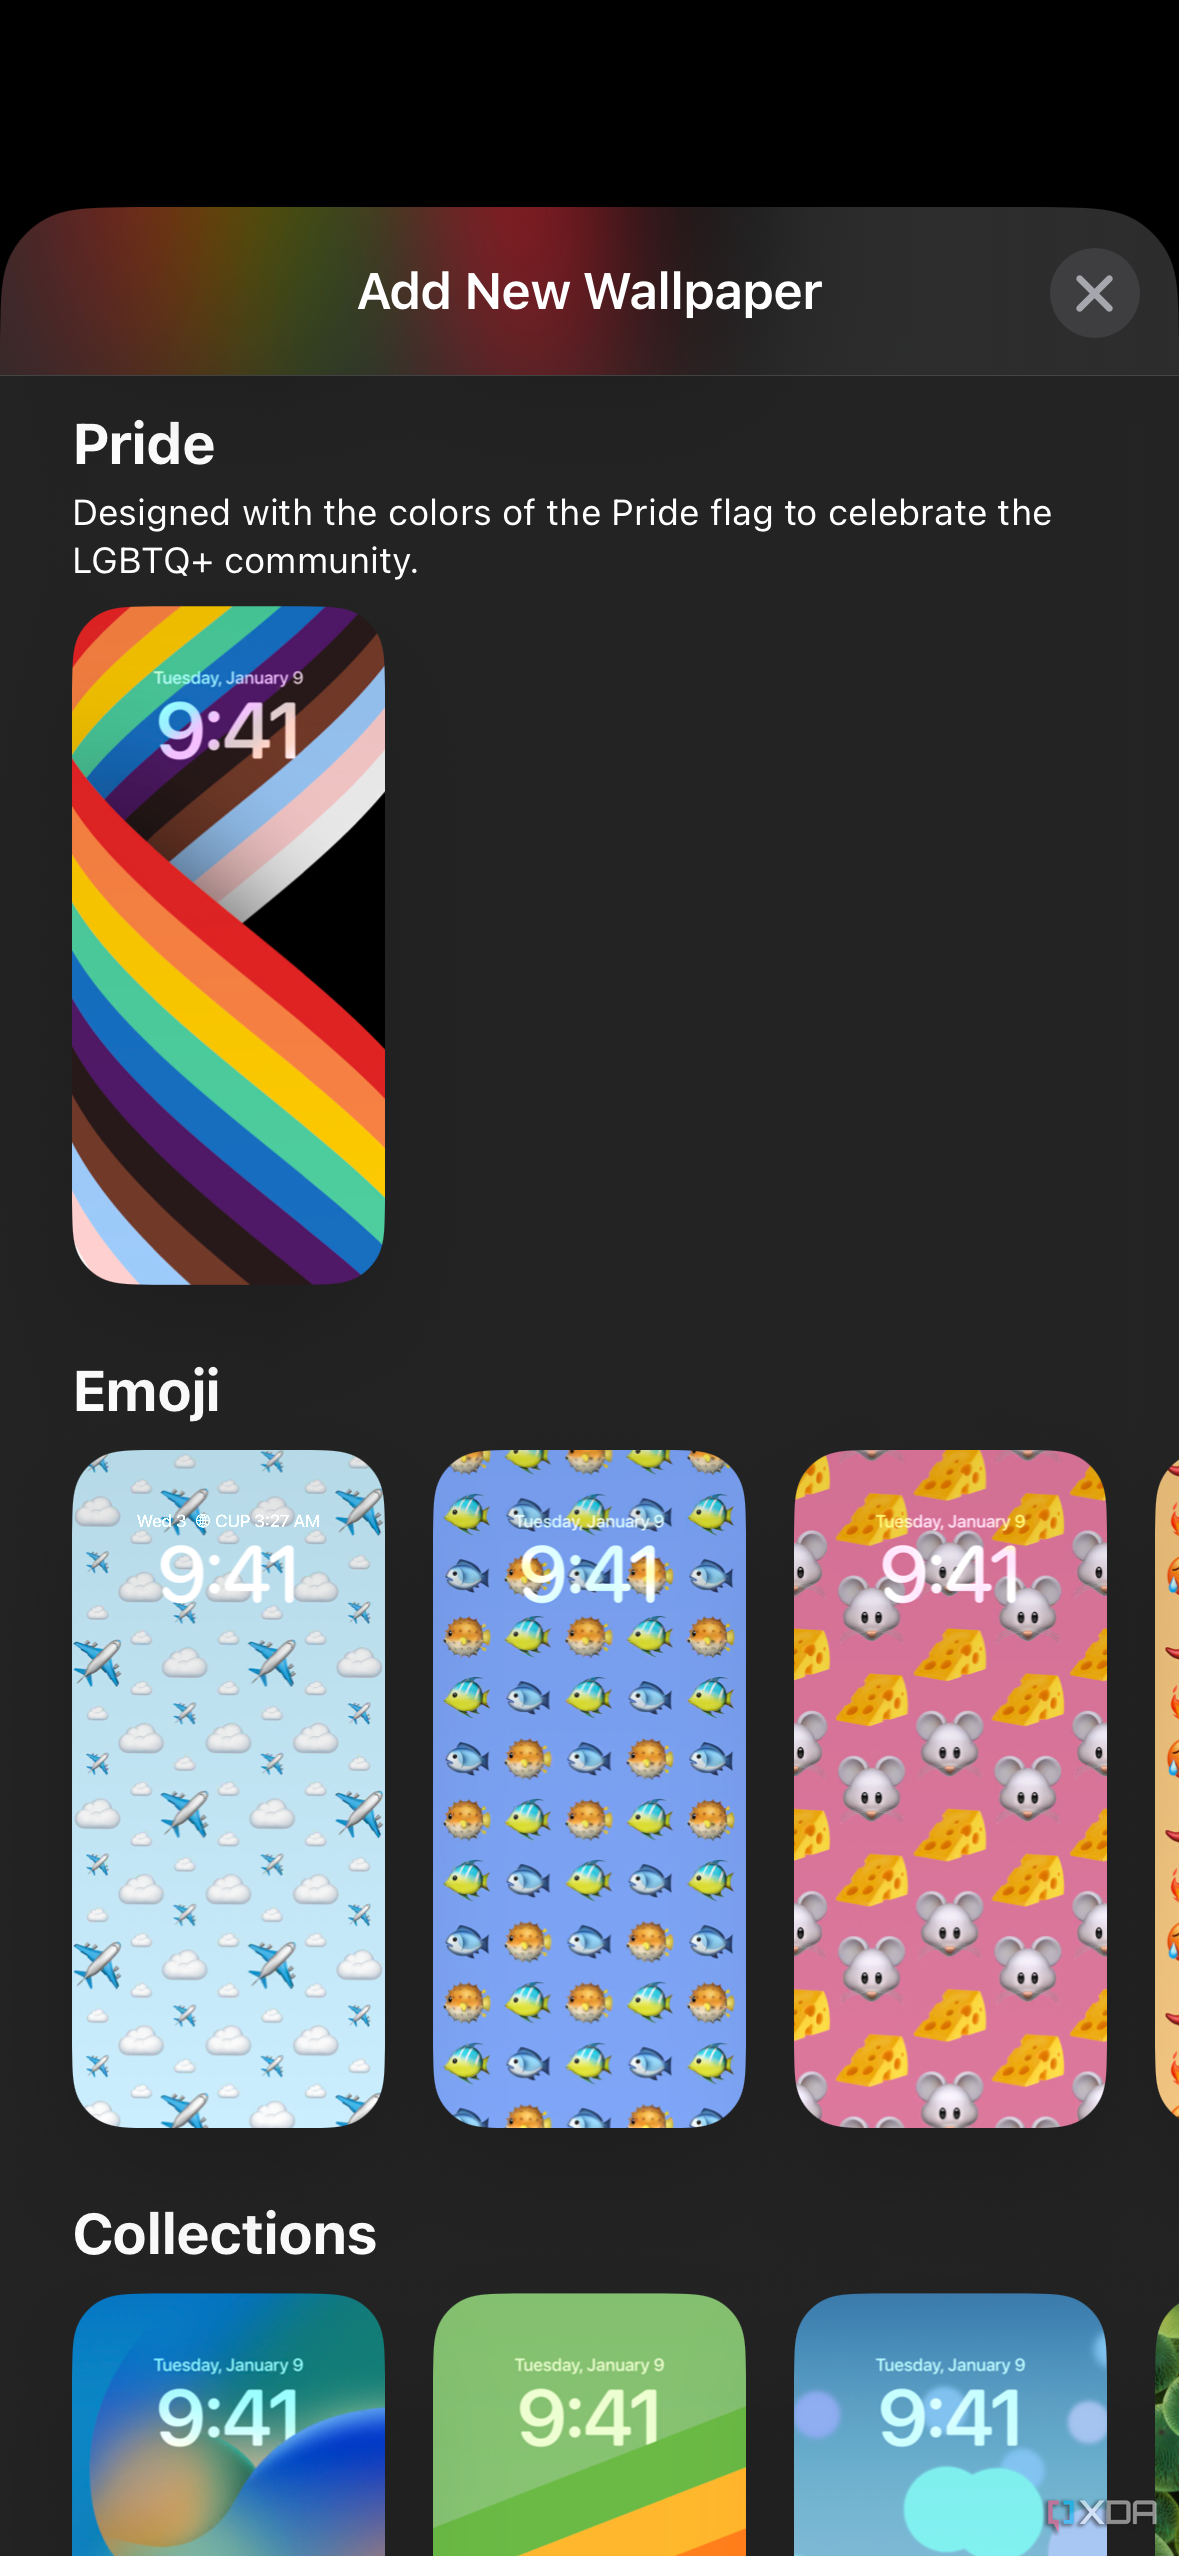 Pride wallpaper section on iOS 16.5 beta 4